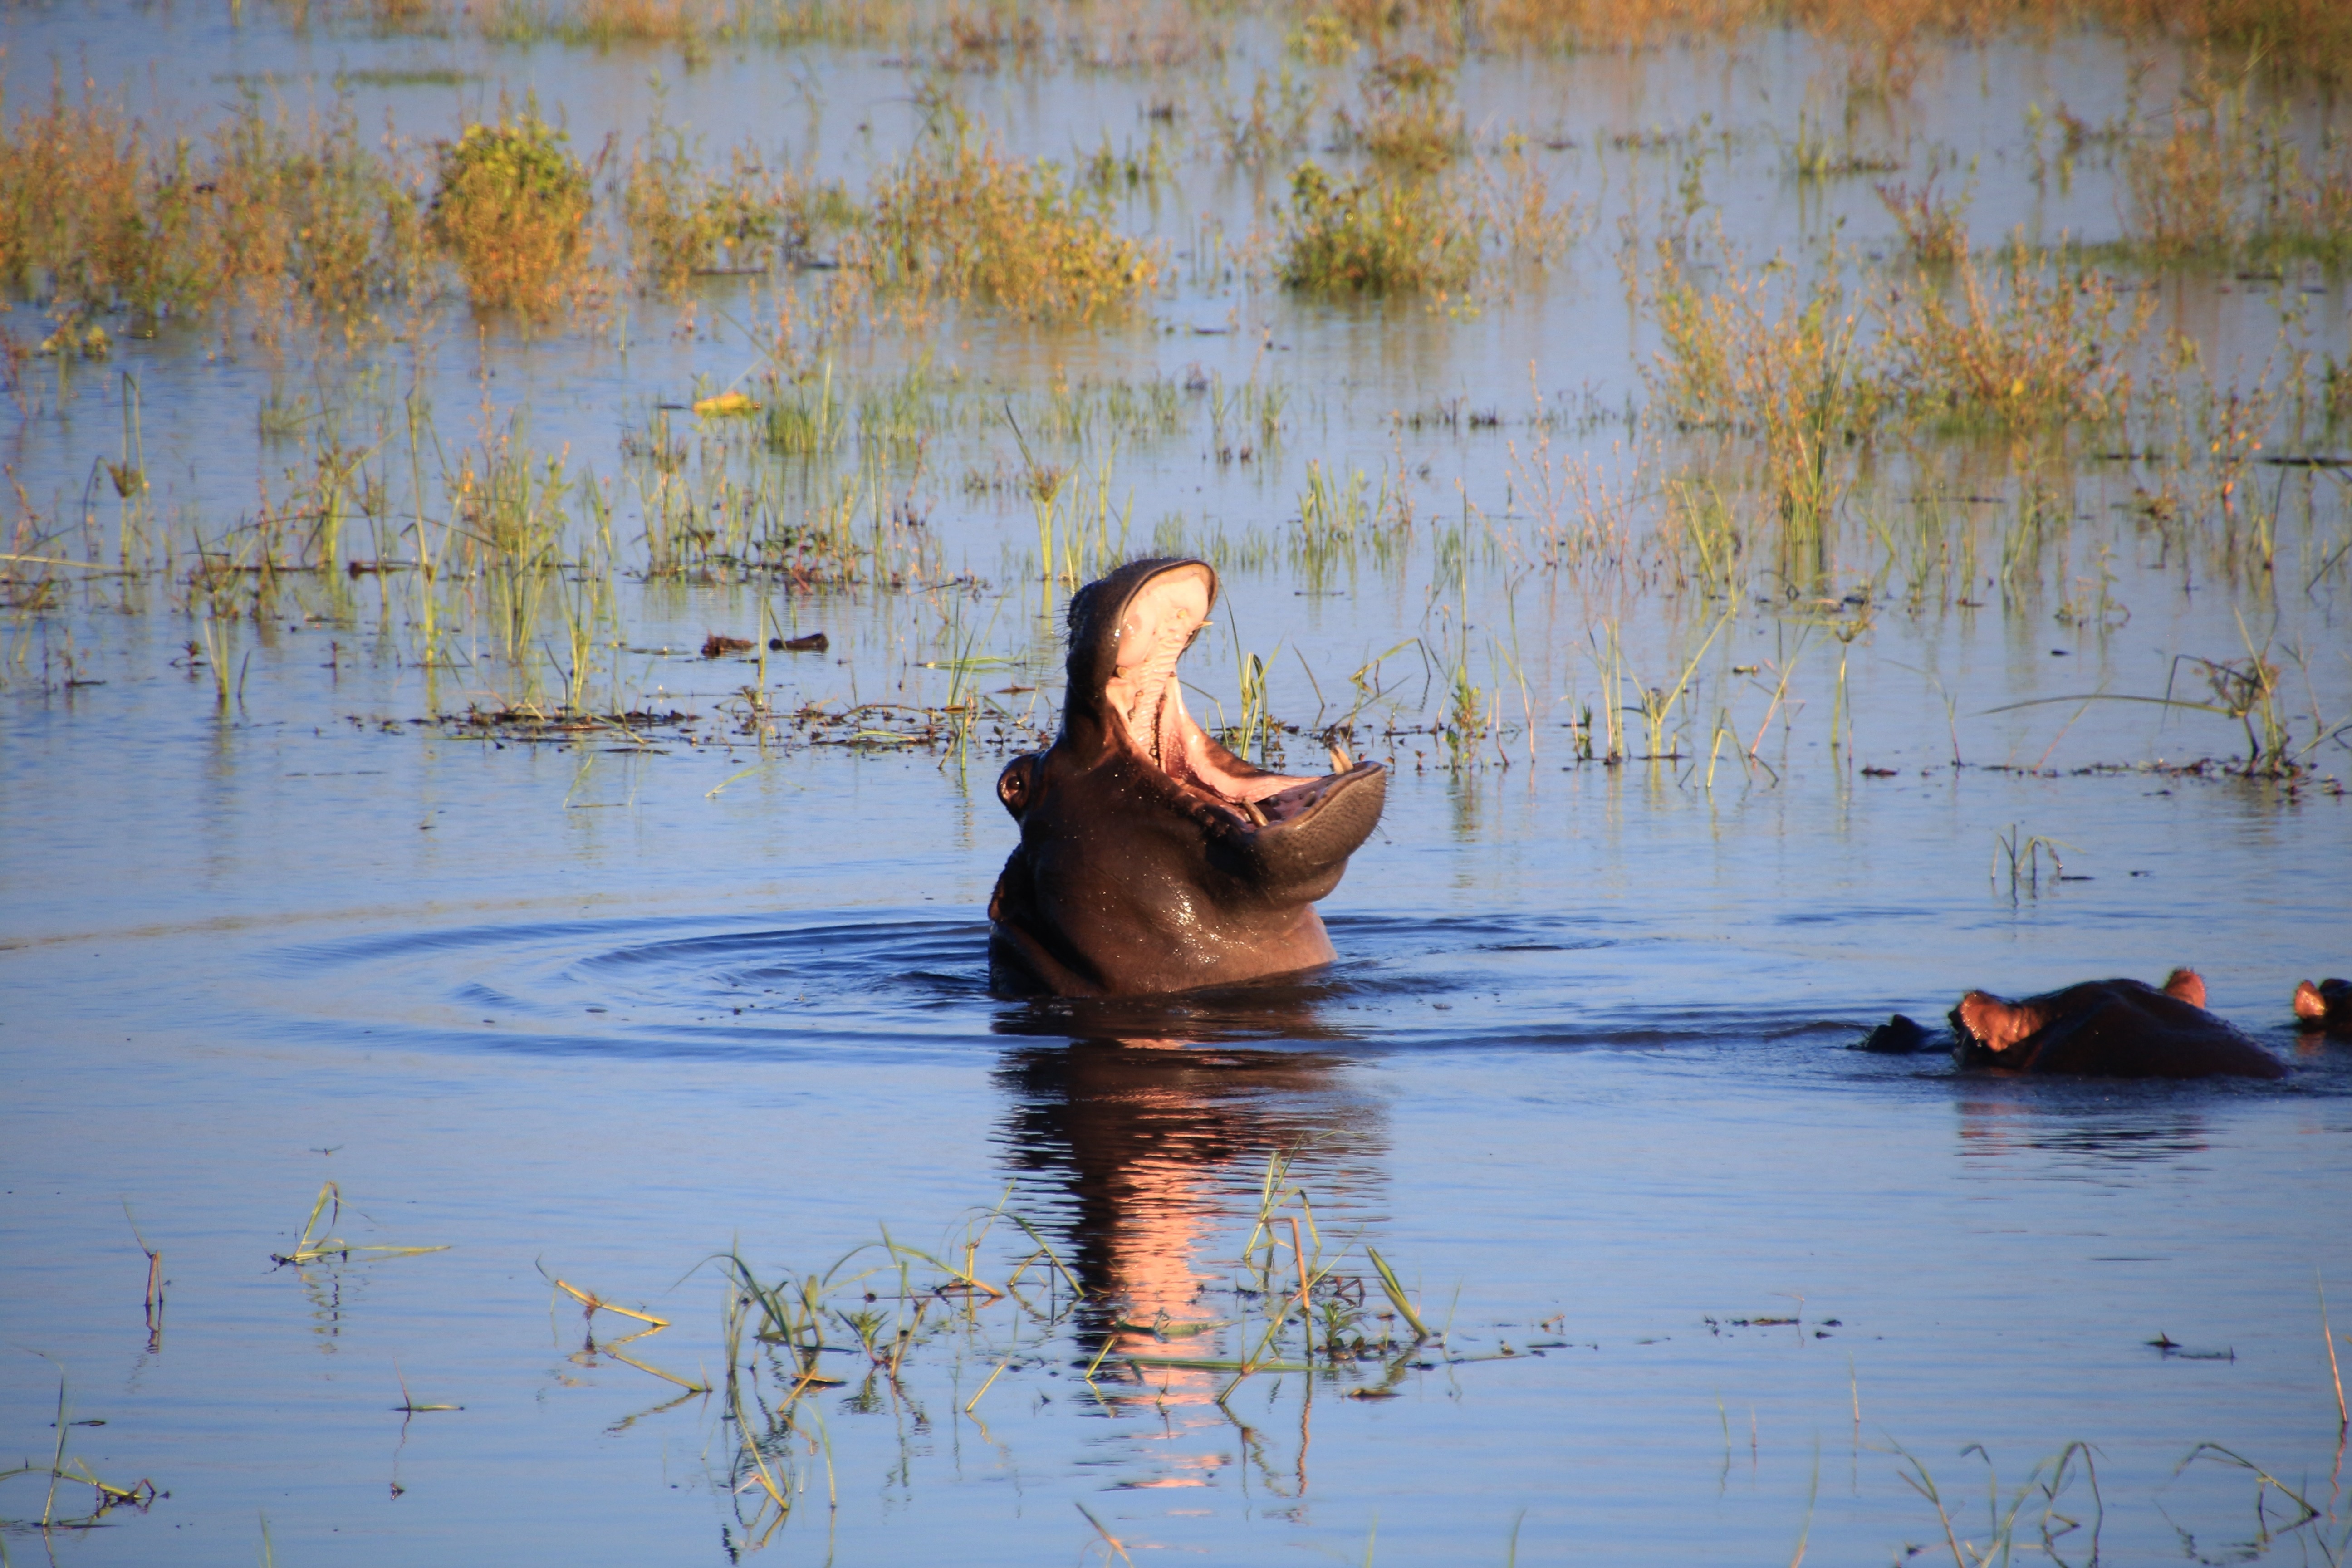 brown hippopotamus